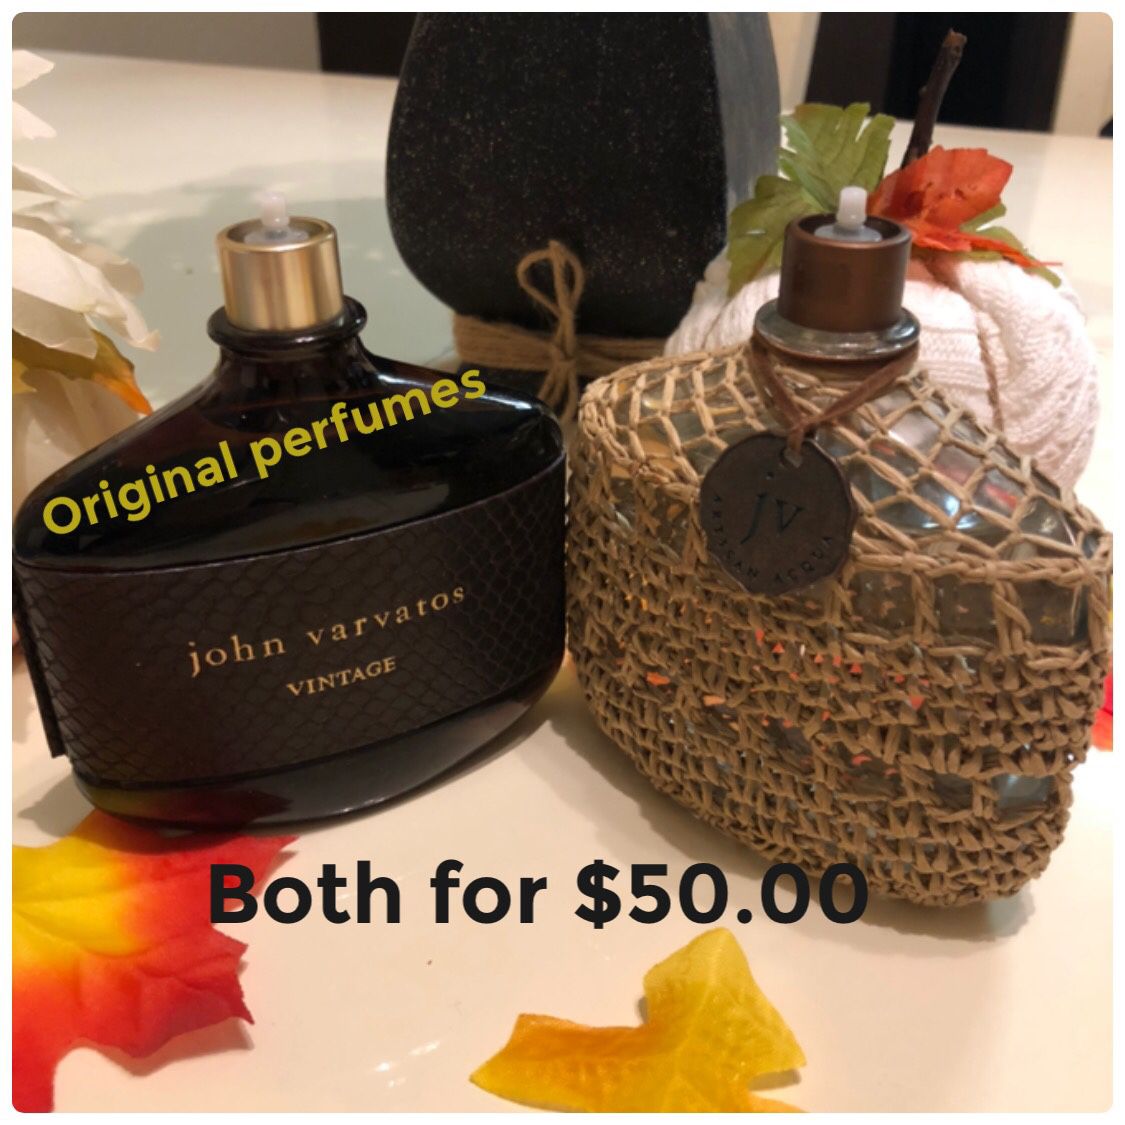 “AUTHENTIC “MAN PERFUME John Varvaros VINTAGE Both $50.00 MAKE OFFER